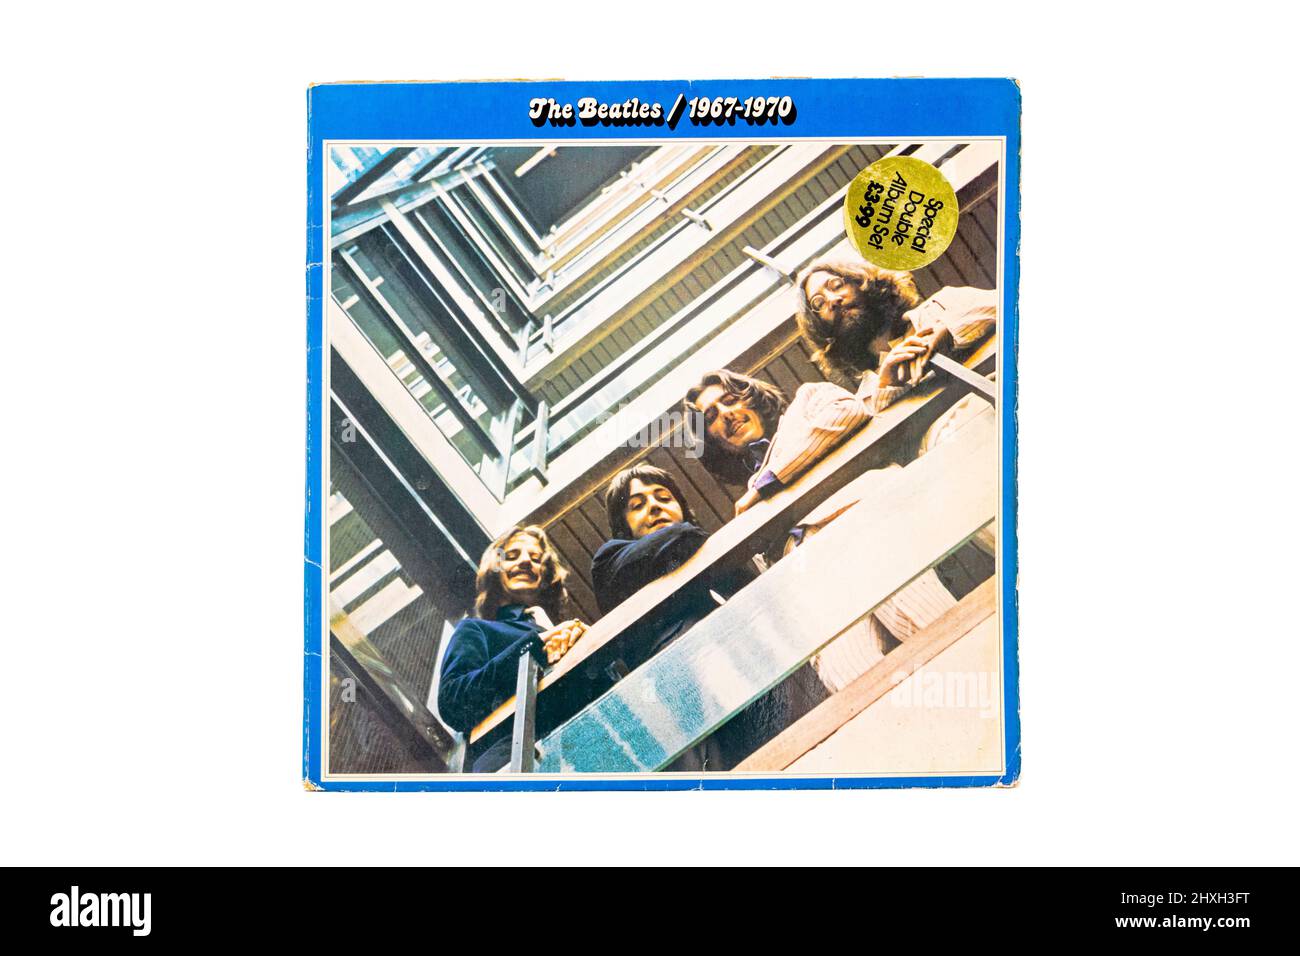 The Beatles 1967-1970 blue vinyl LP record cover - Alamy